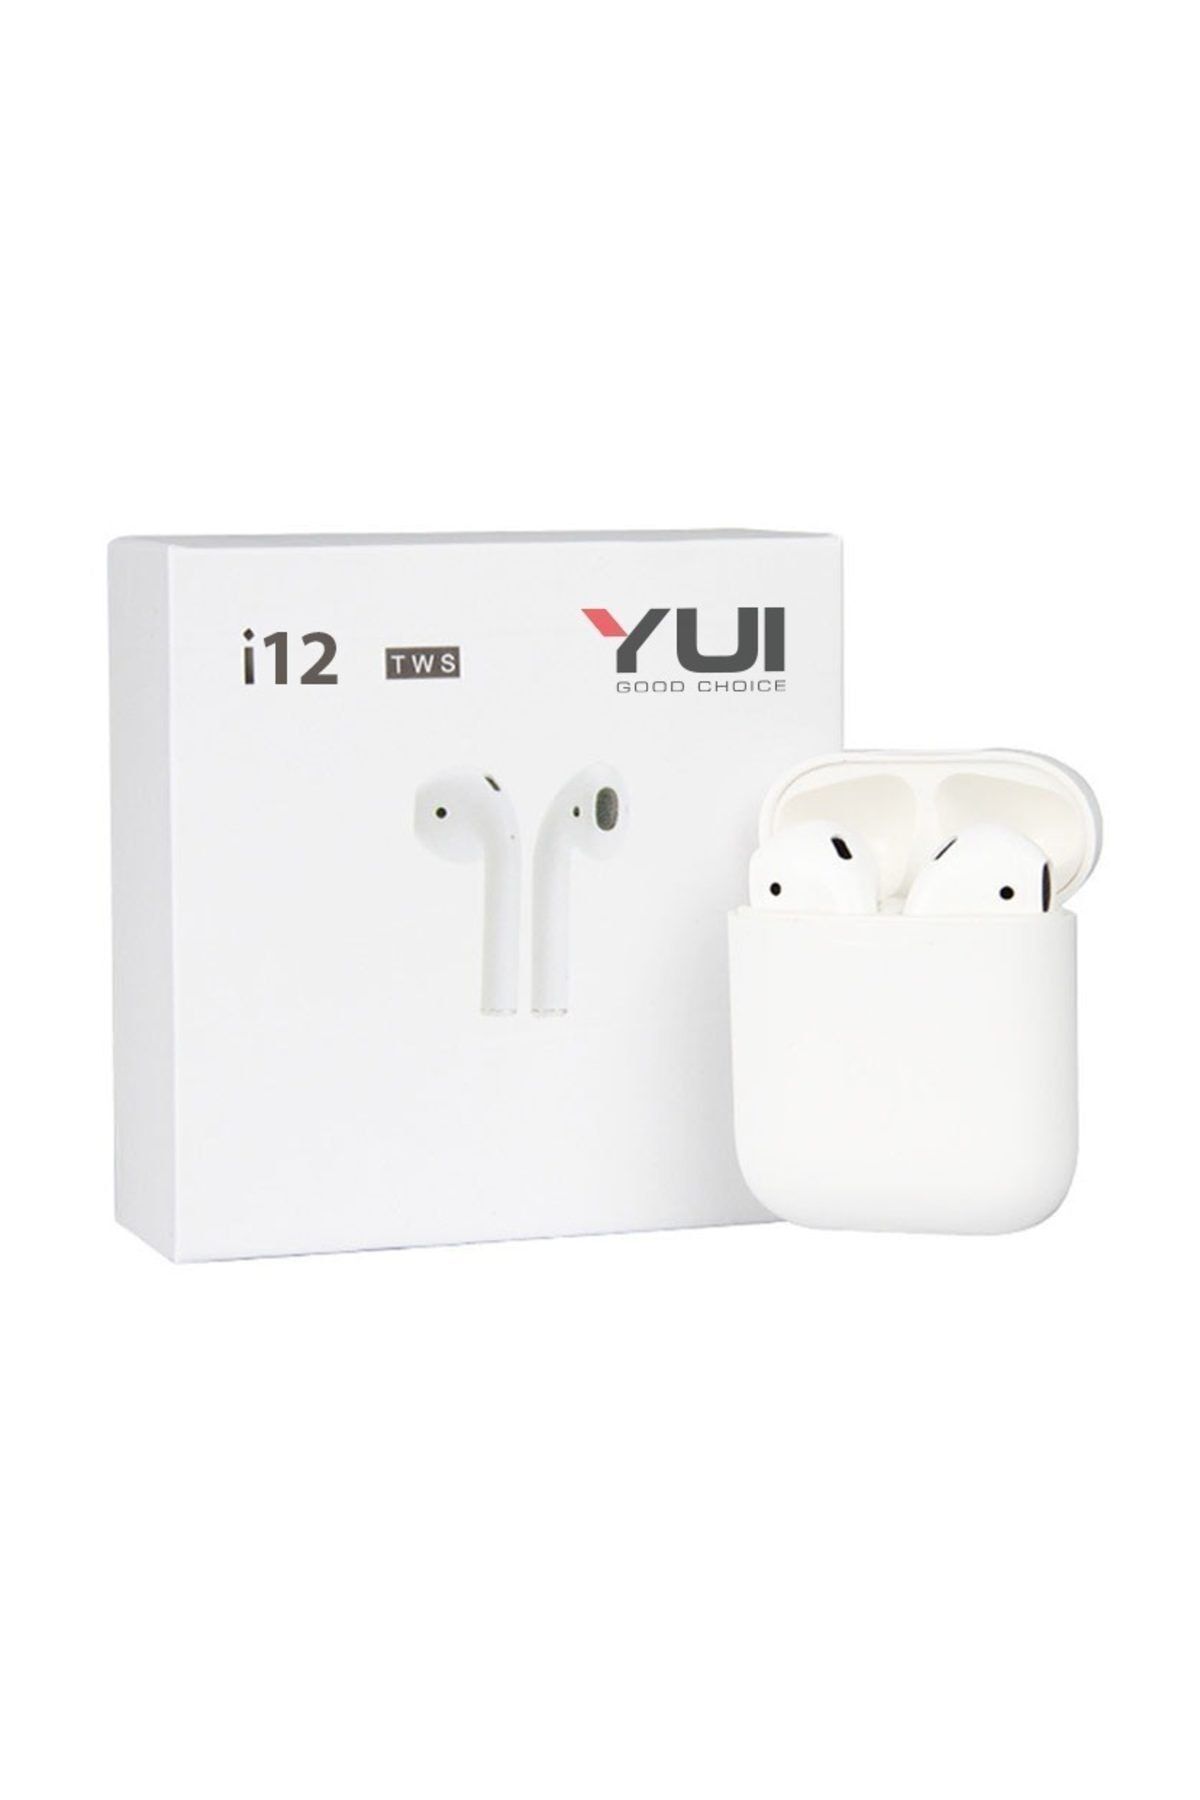 Yui i12 TWS Beyaz Bluetooth Kulaklık (Yui Türkiye Garantili) (Ios Android Universal Uyumlu)